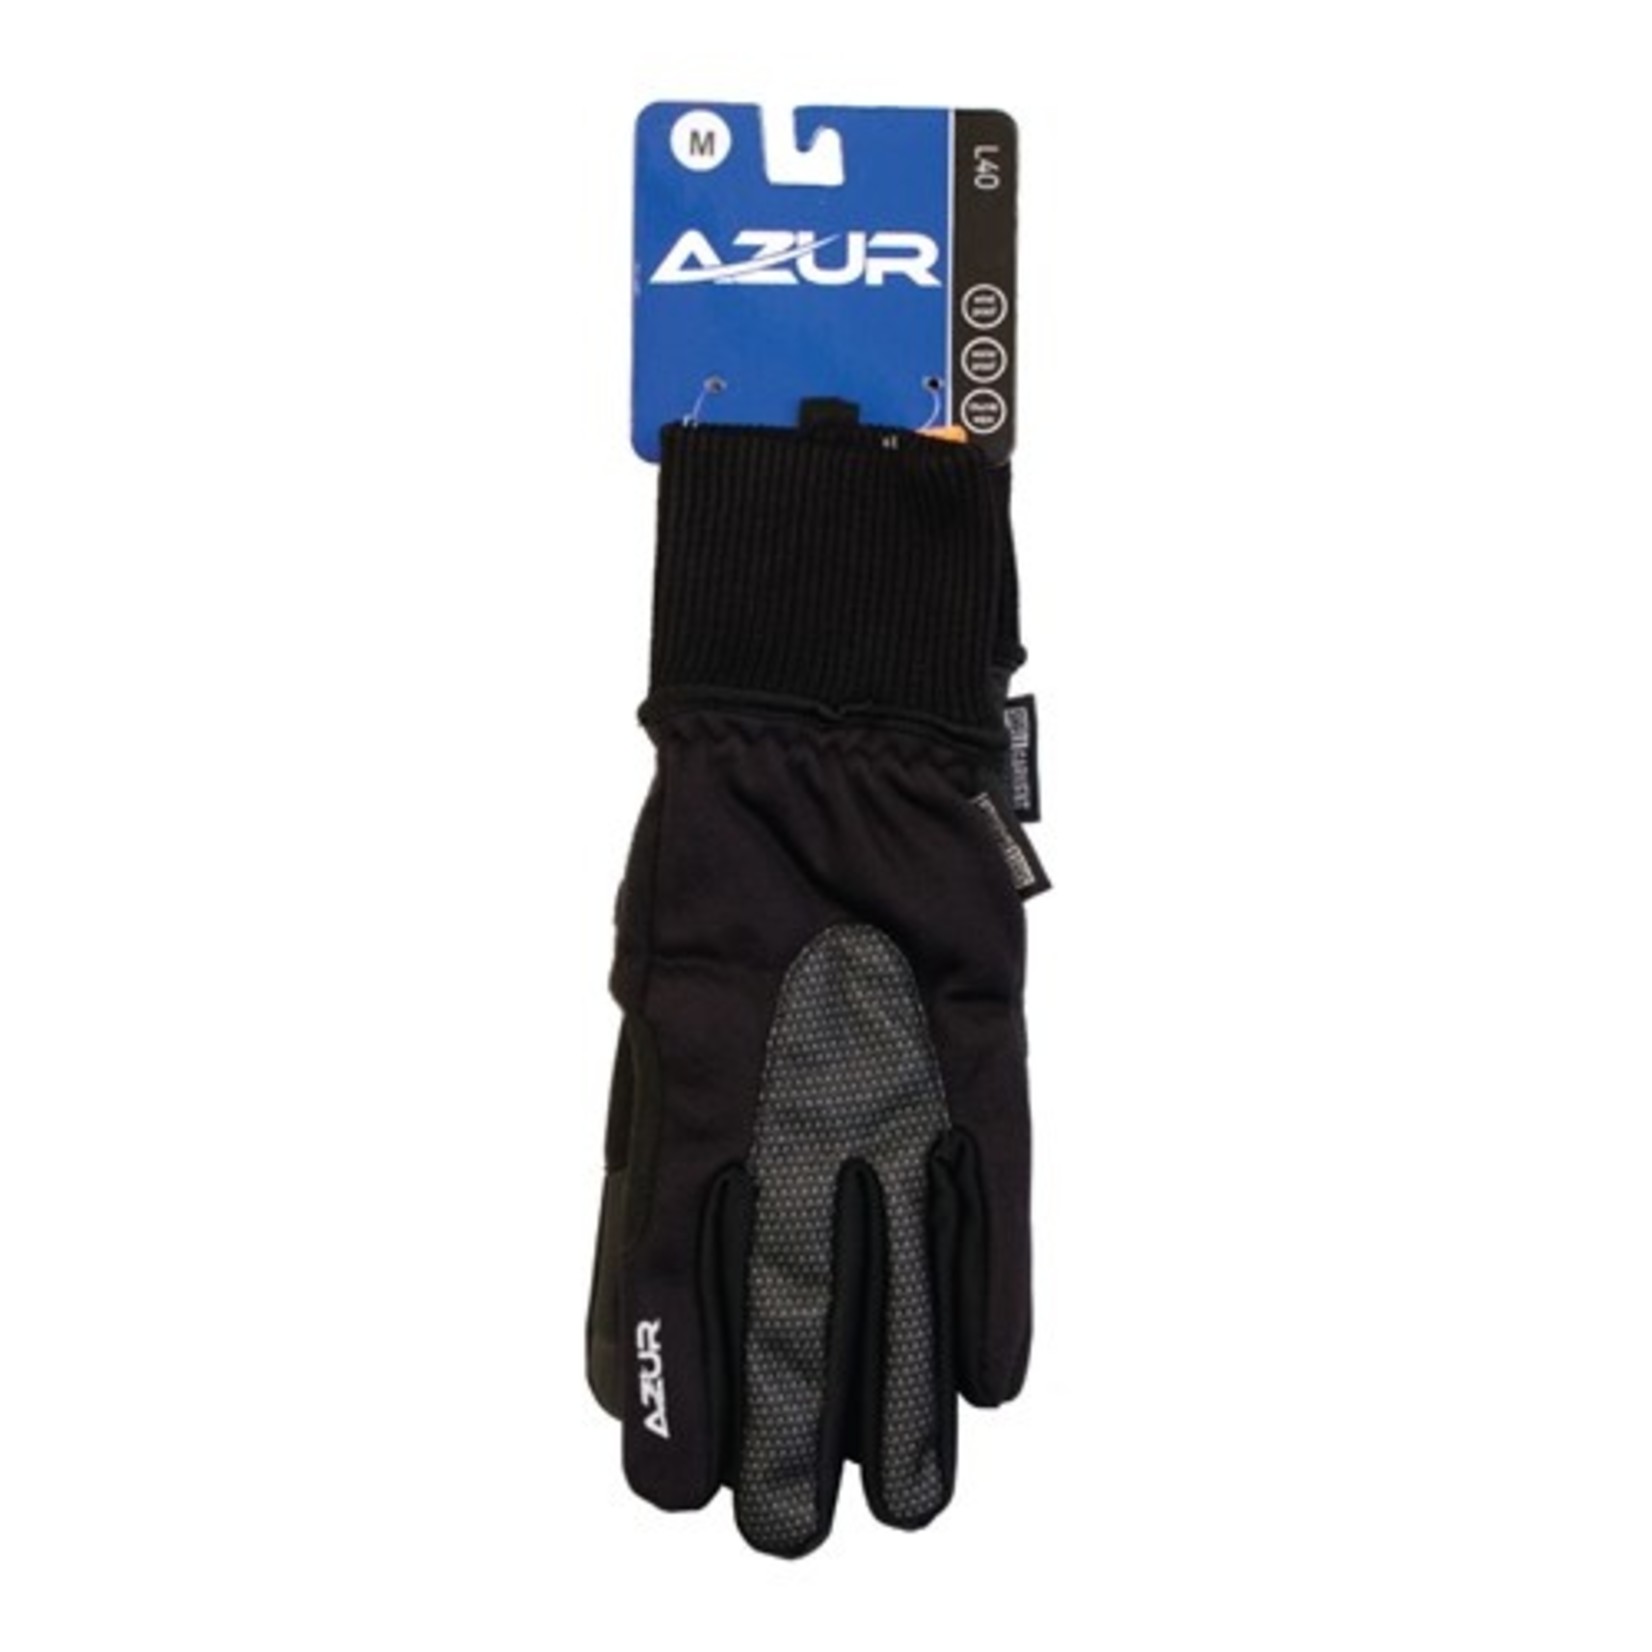 Azur Azur Bike/Cycling Gloves - L40 Series - Black - Large